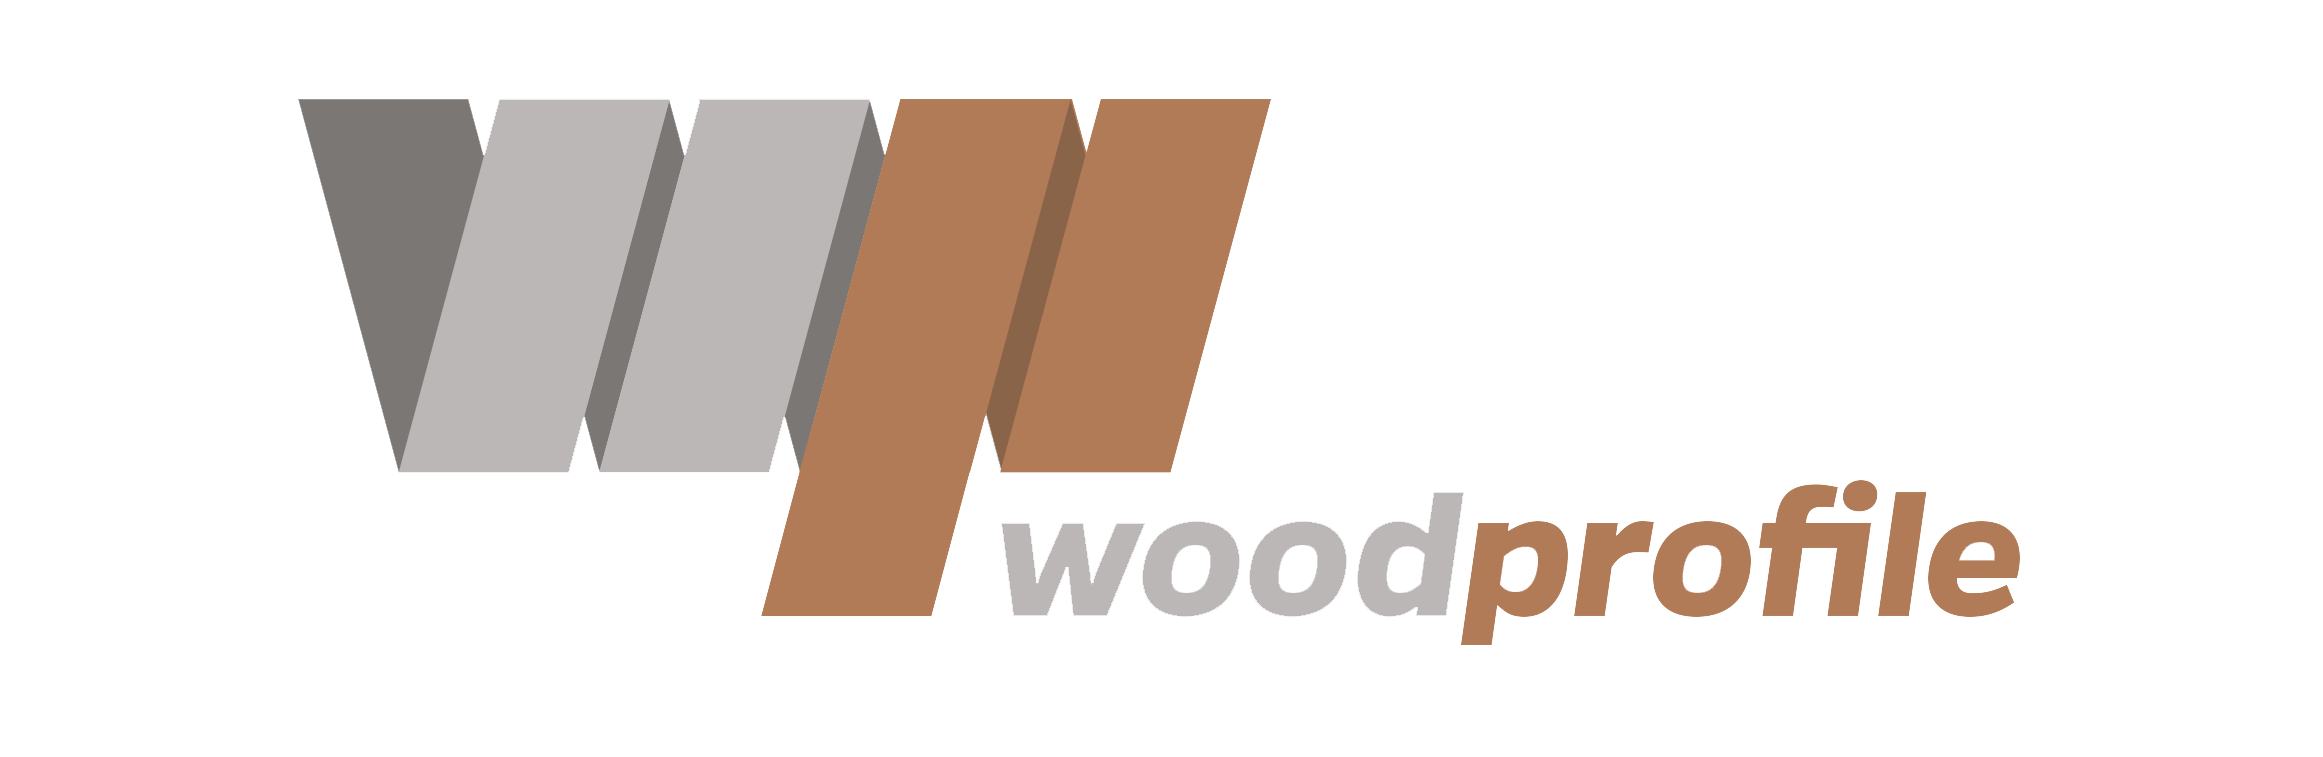 Woodprofile